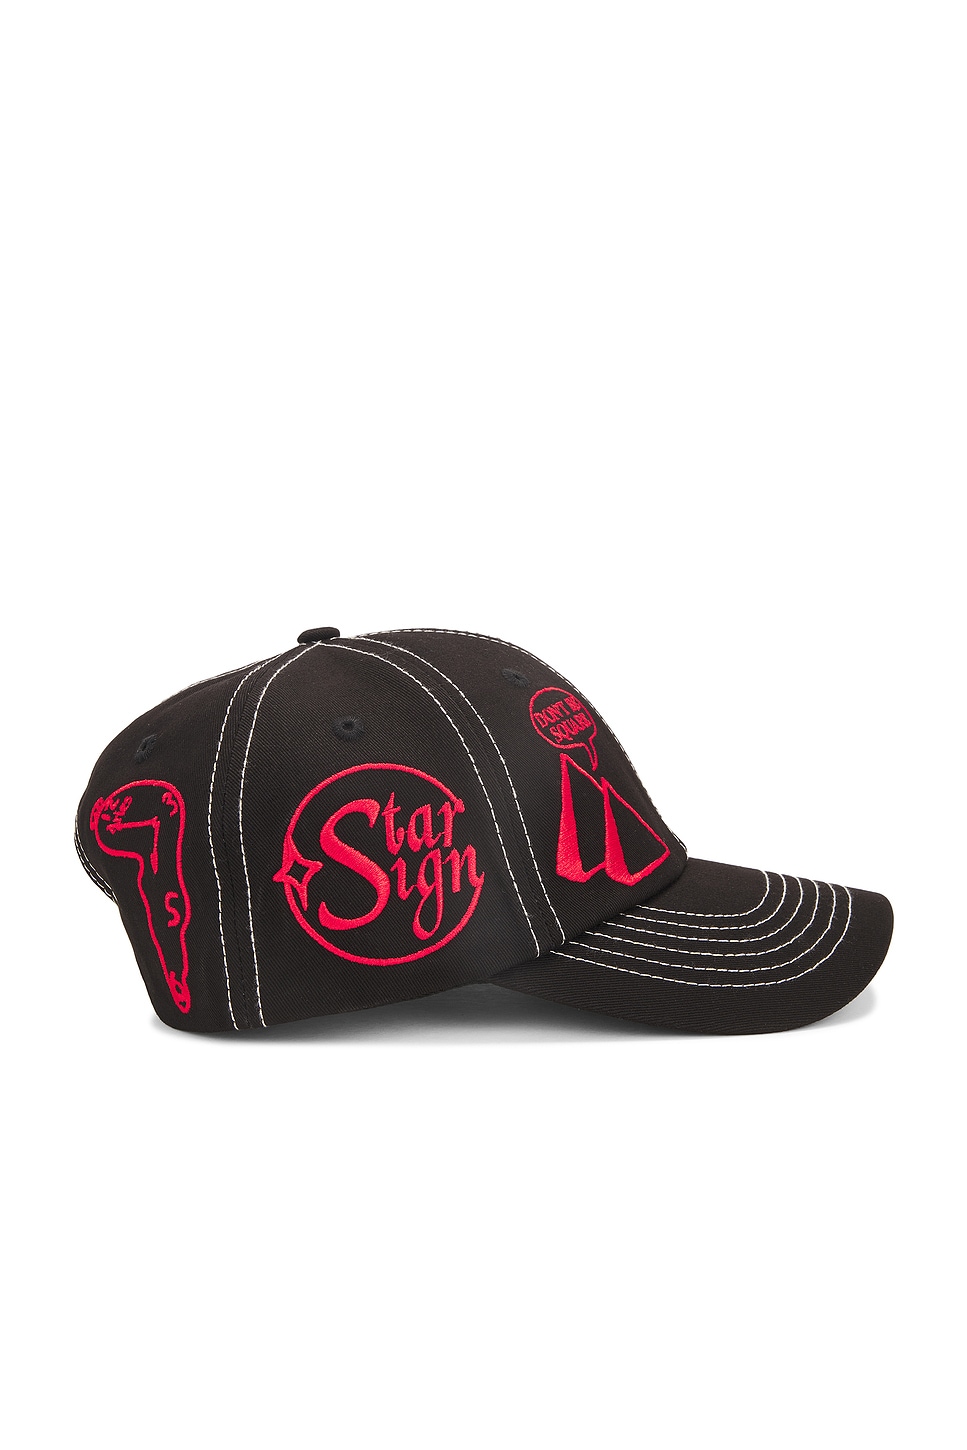 Shop Aries 360 Cap In Black